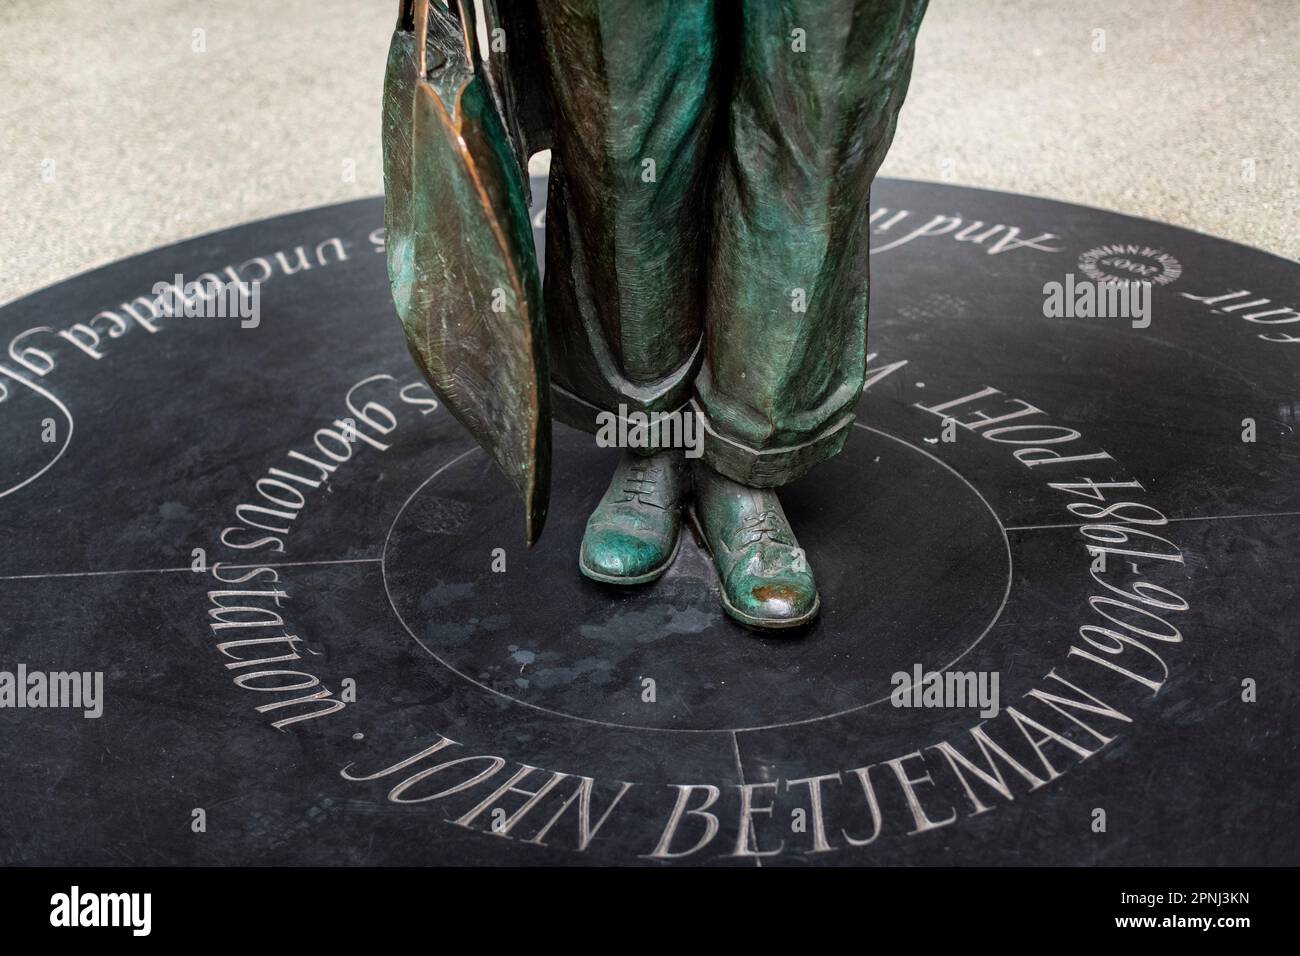 Statue of John Betjeman at St Pancras International train station London UK on upper floor Press your door to pick up your words Stock Photo